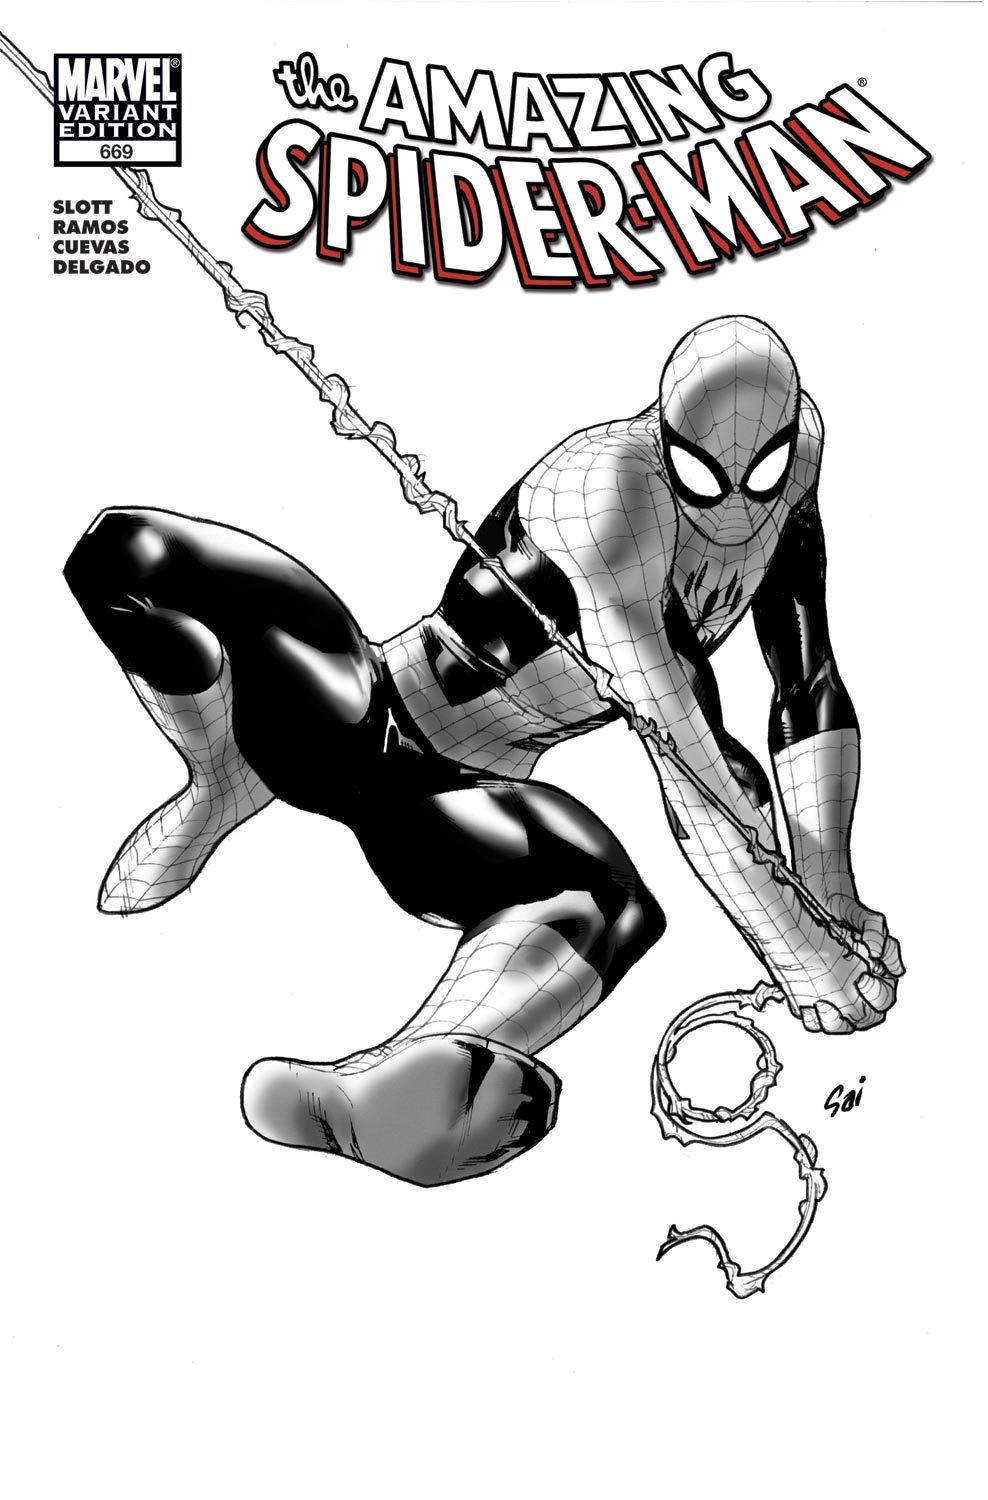 Quick Spider-Man drawing : r/Spiderman